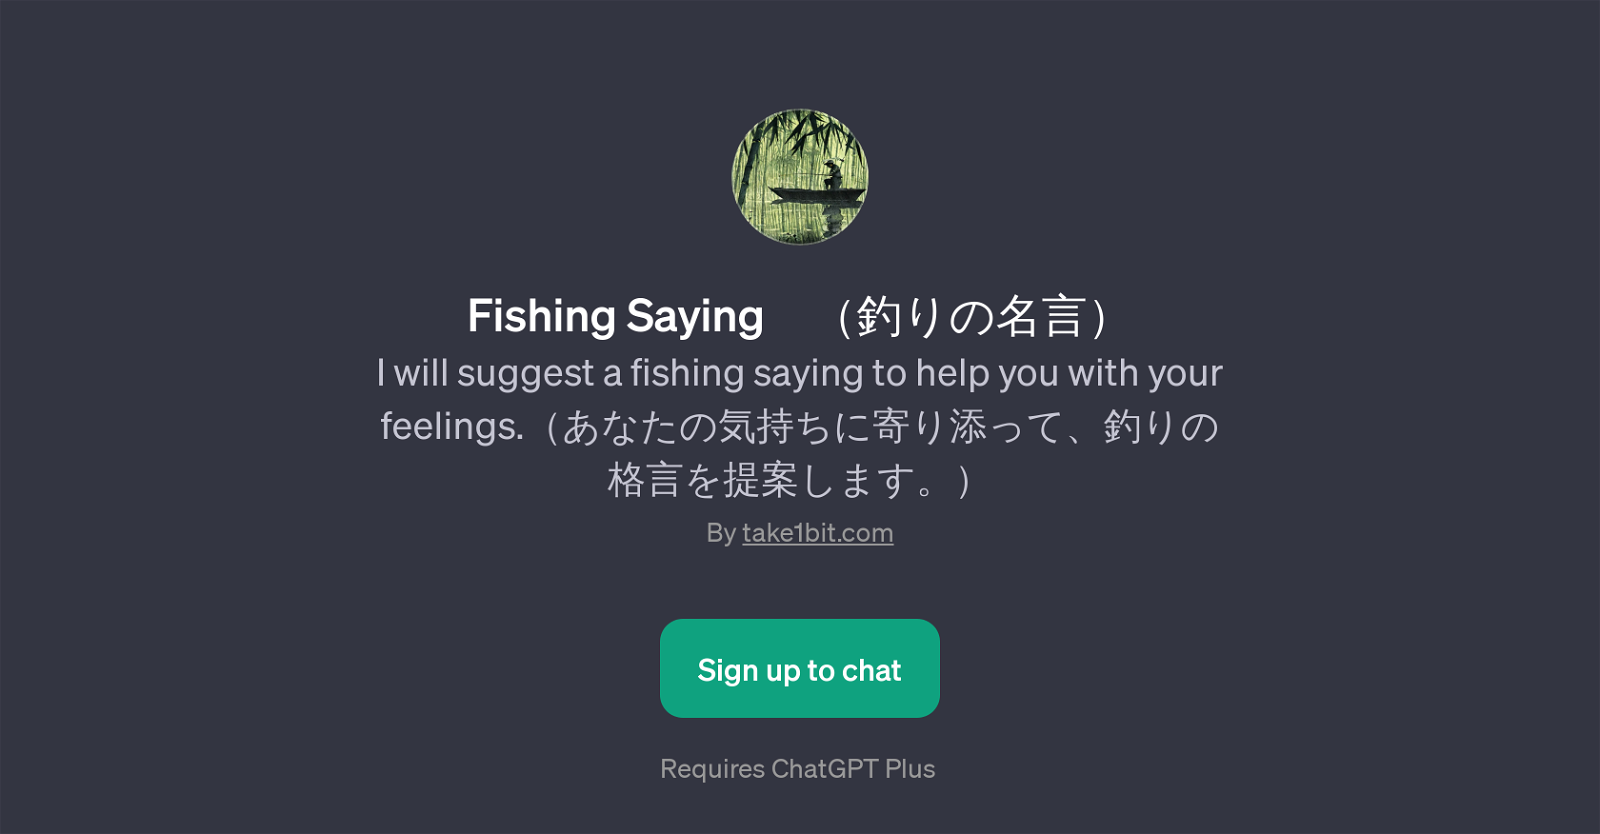 Fishing Saying website